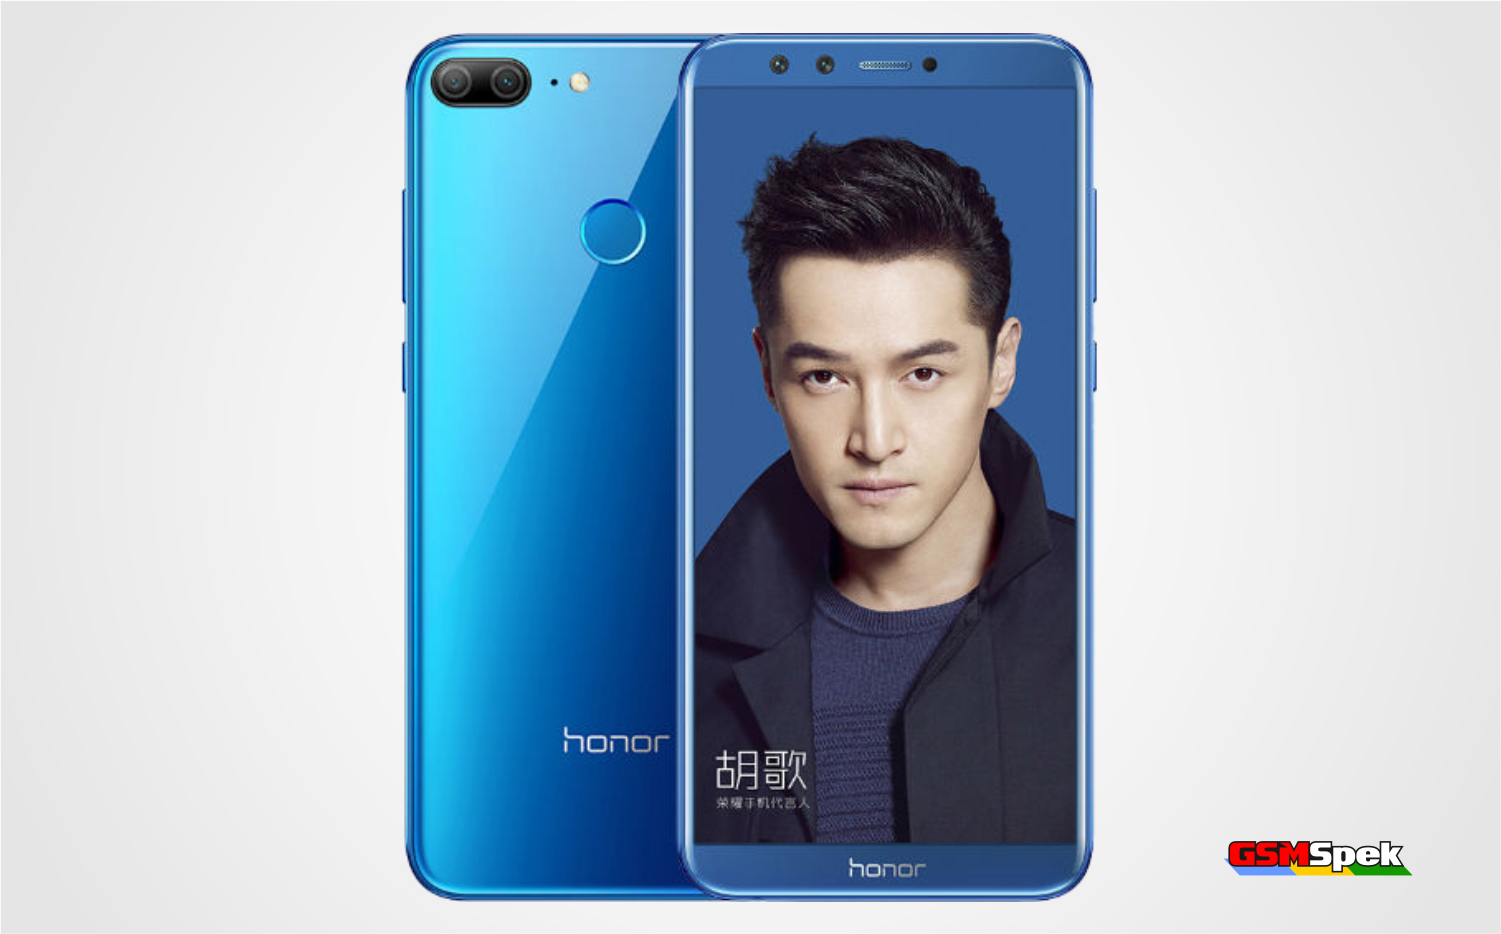 Обзор Huawei Honor 9 Lite 32GB: плюсы и минусы устройства